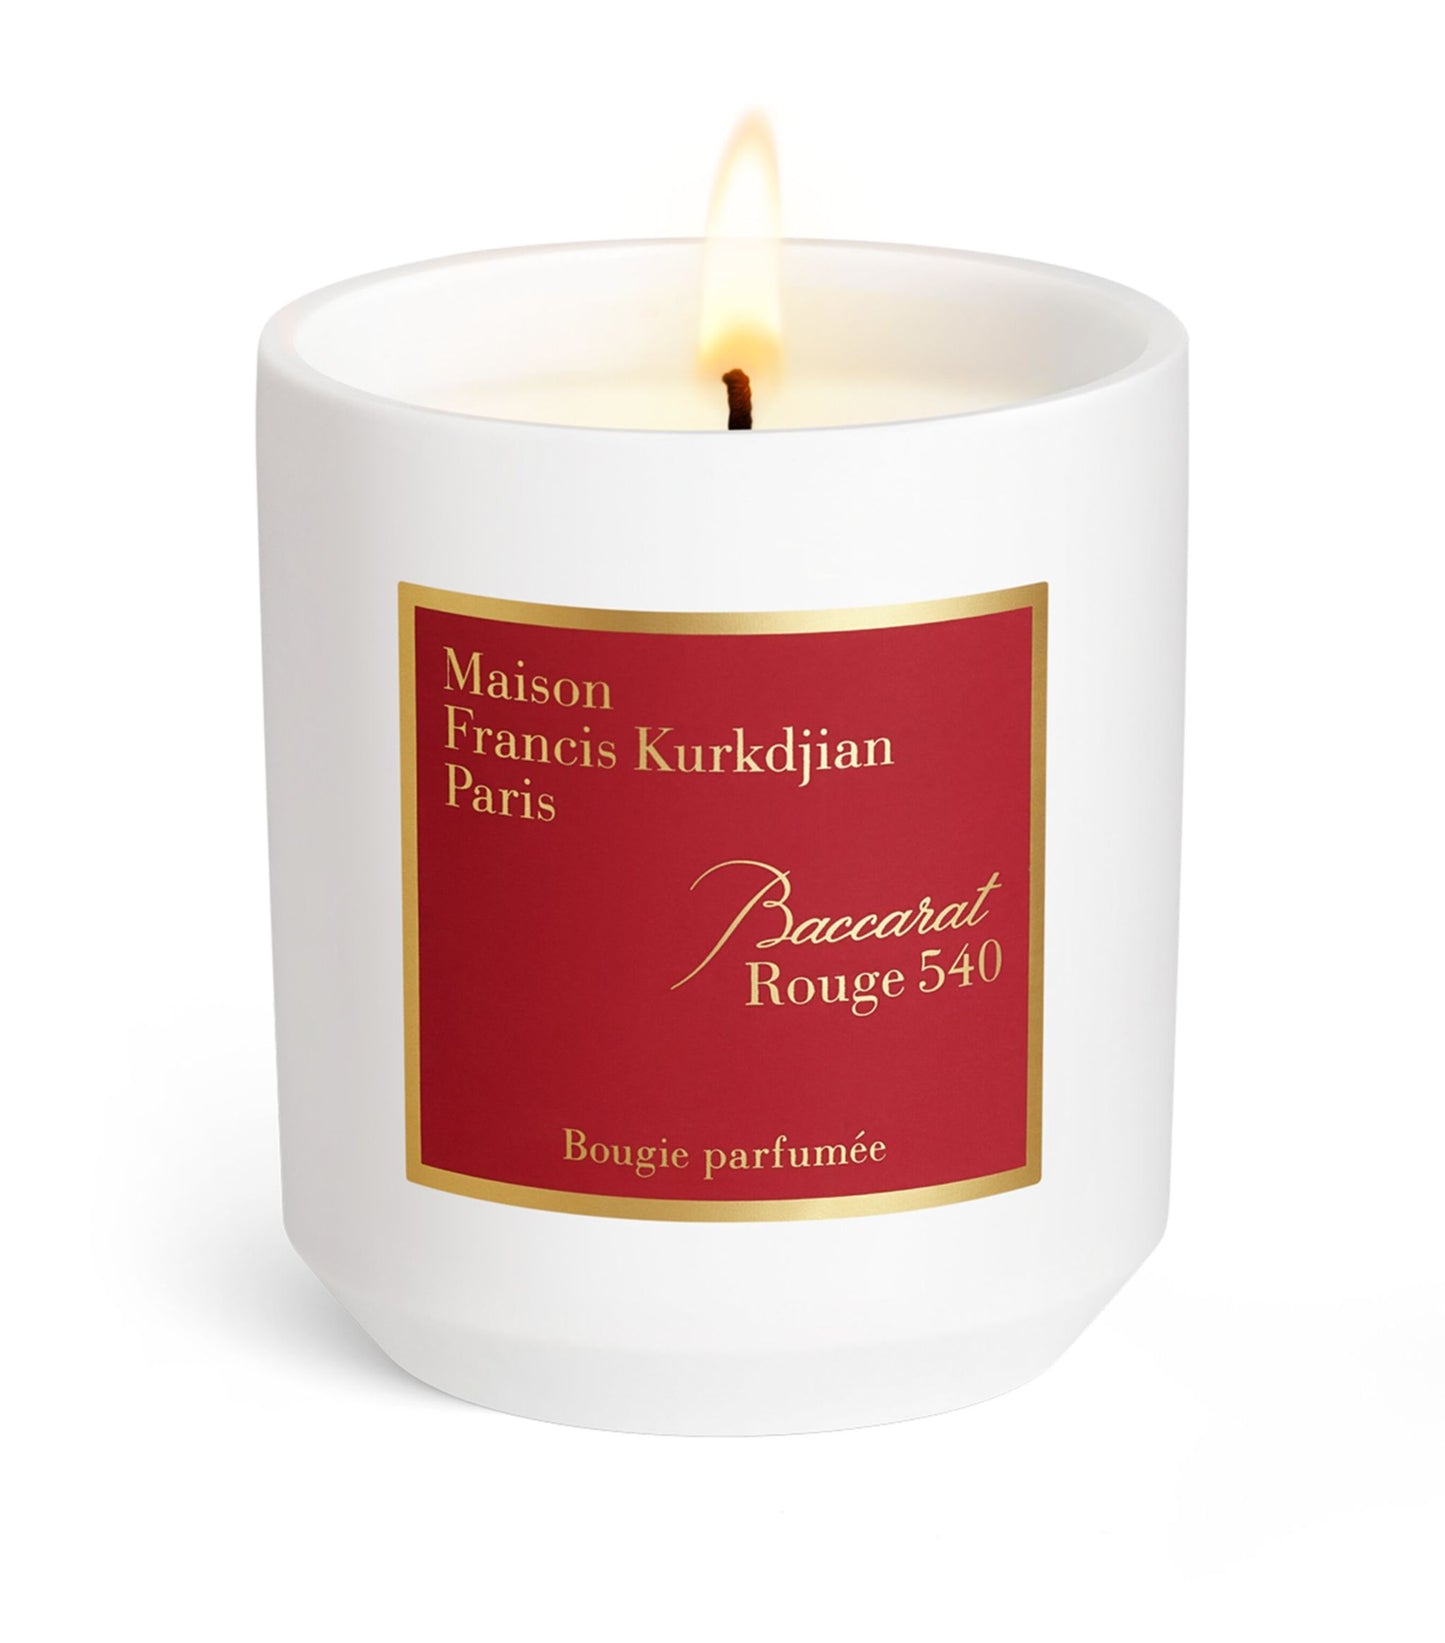 Maison Francis Kurkdjian - Baccarat Rouge 540 - Candle